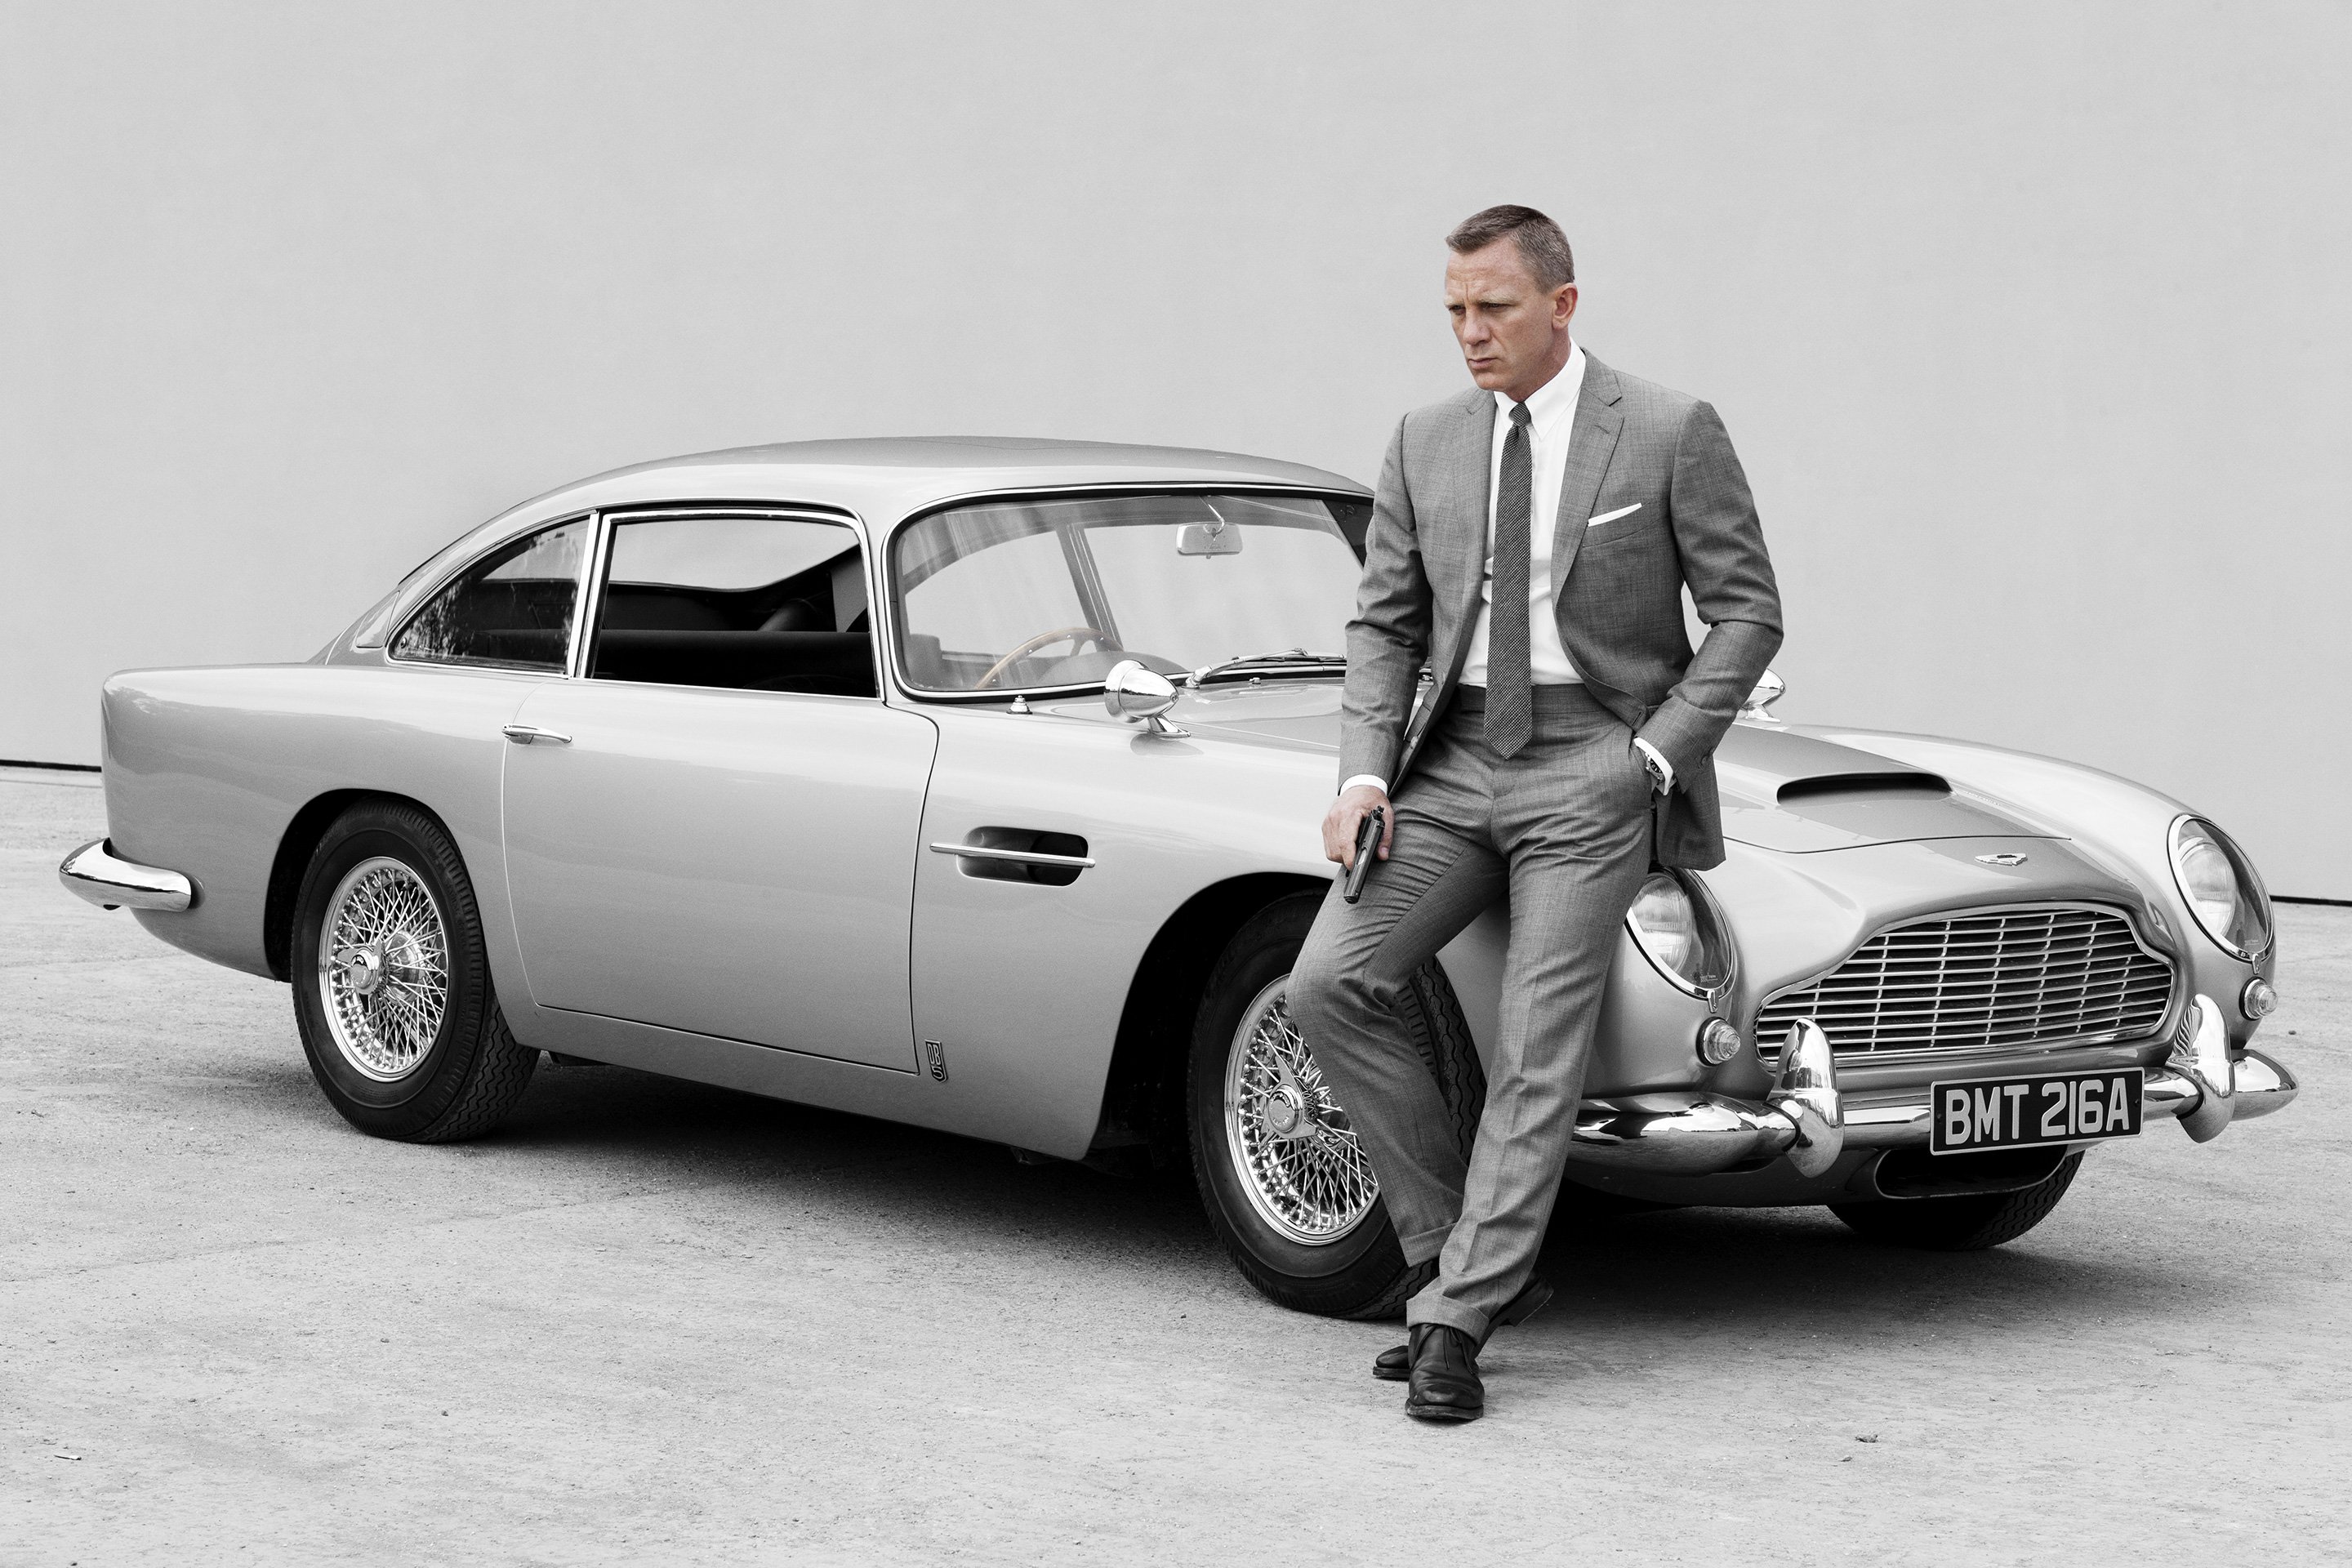 Spectre Bond James Action 1spectre Crime Mystery Spy Thriller